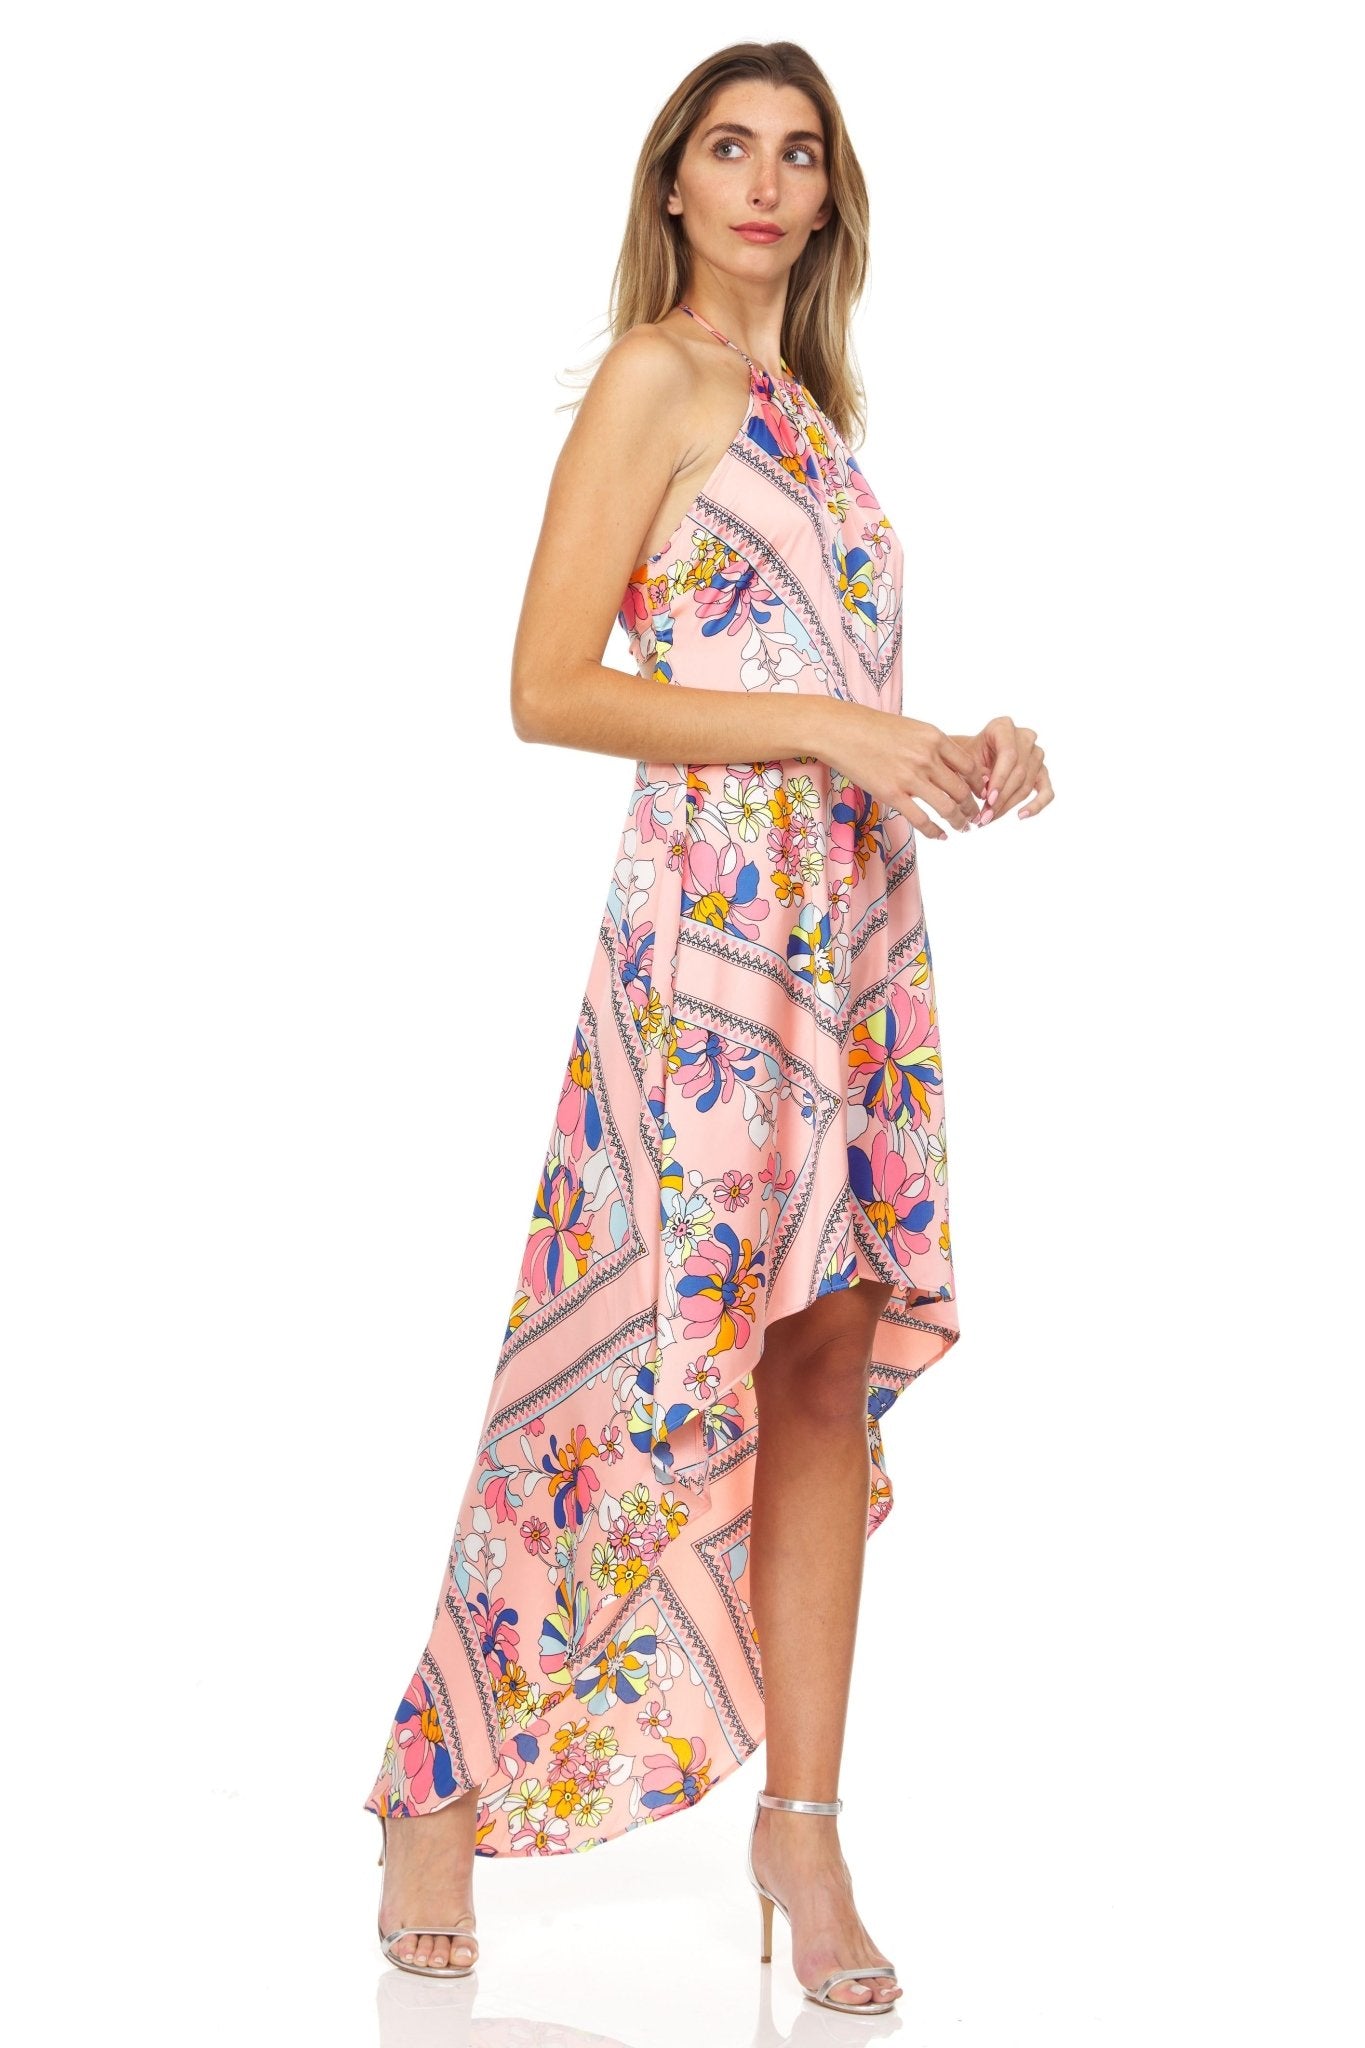 Scarf Print Hi-low Maxi Dress - DressbarnDresses